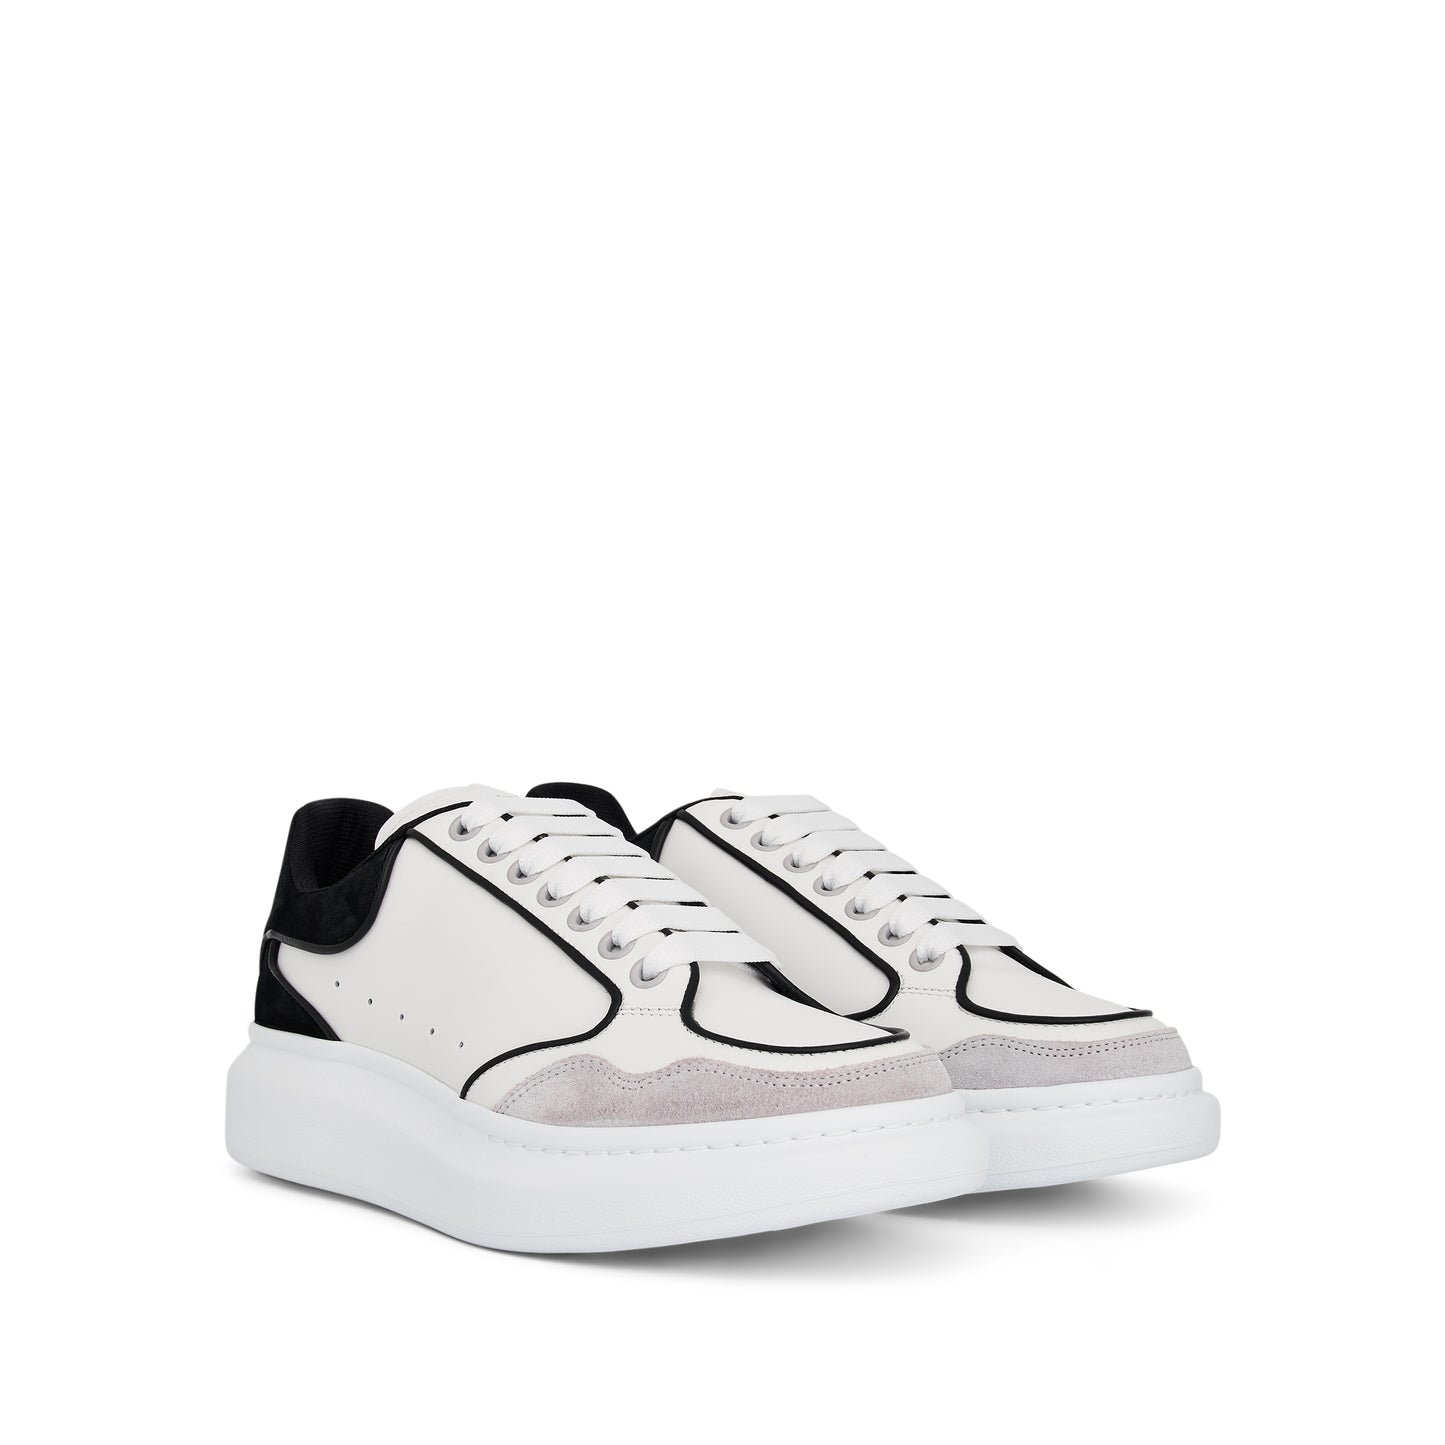 Larry Contrast Sneaker in White/Black